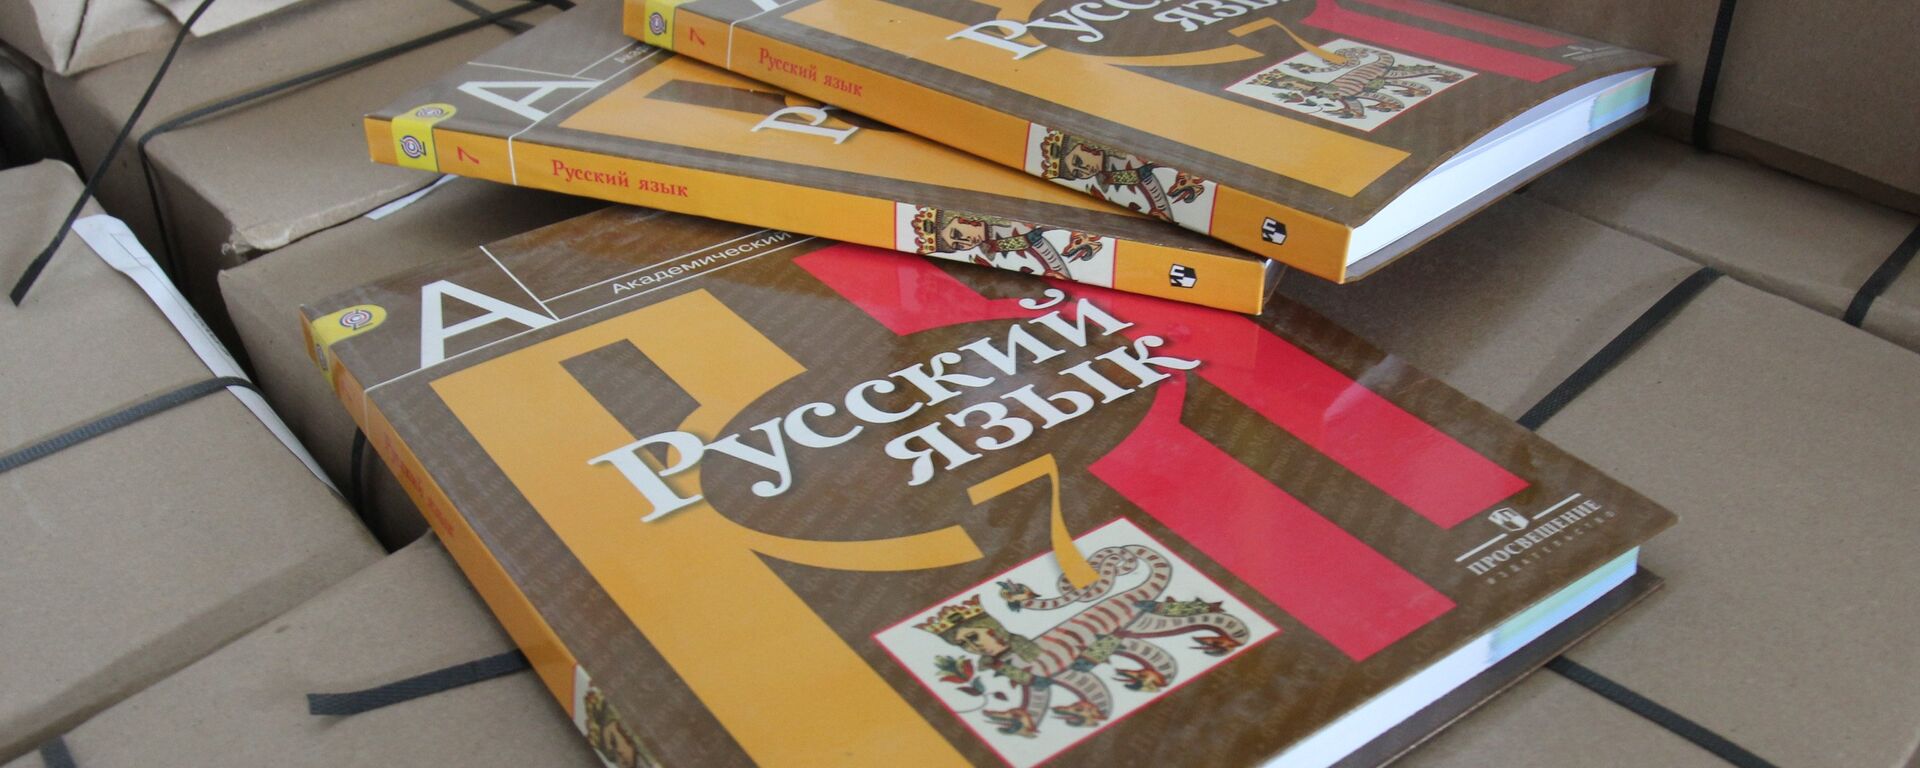 Textbooks on the Russian language. (File) - Sputnik Moldova, 1920, 07.09.2021